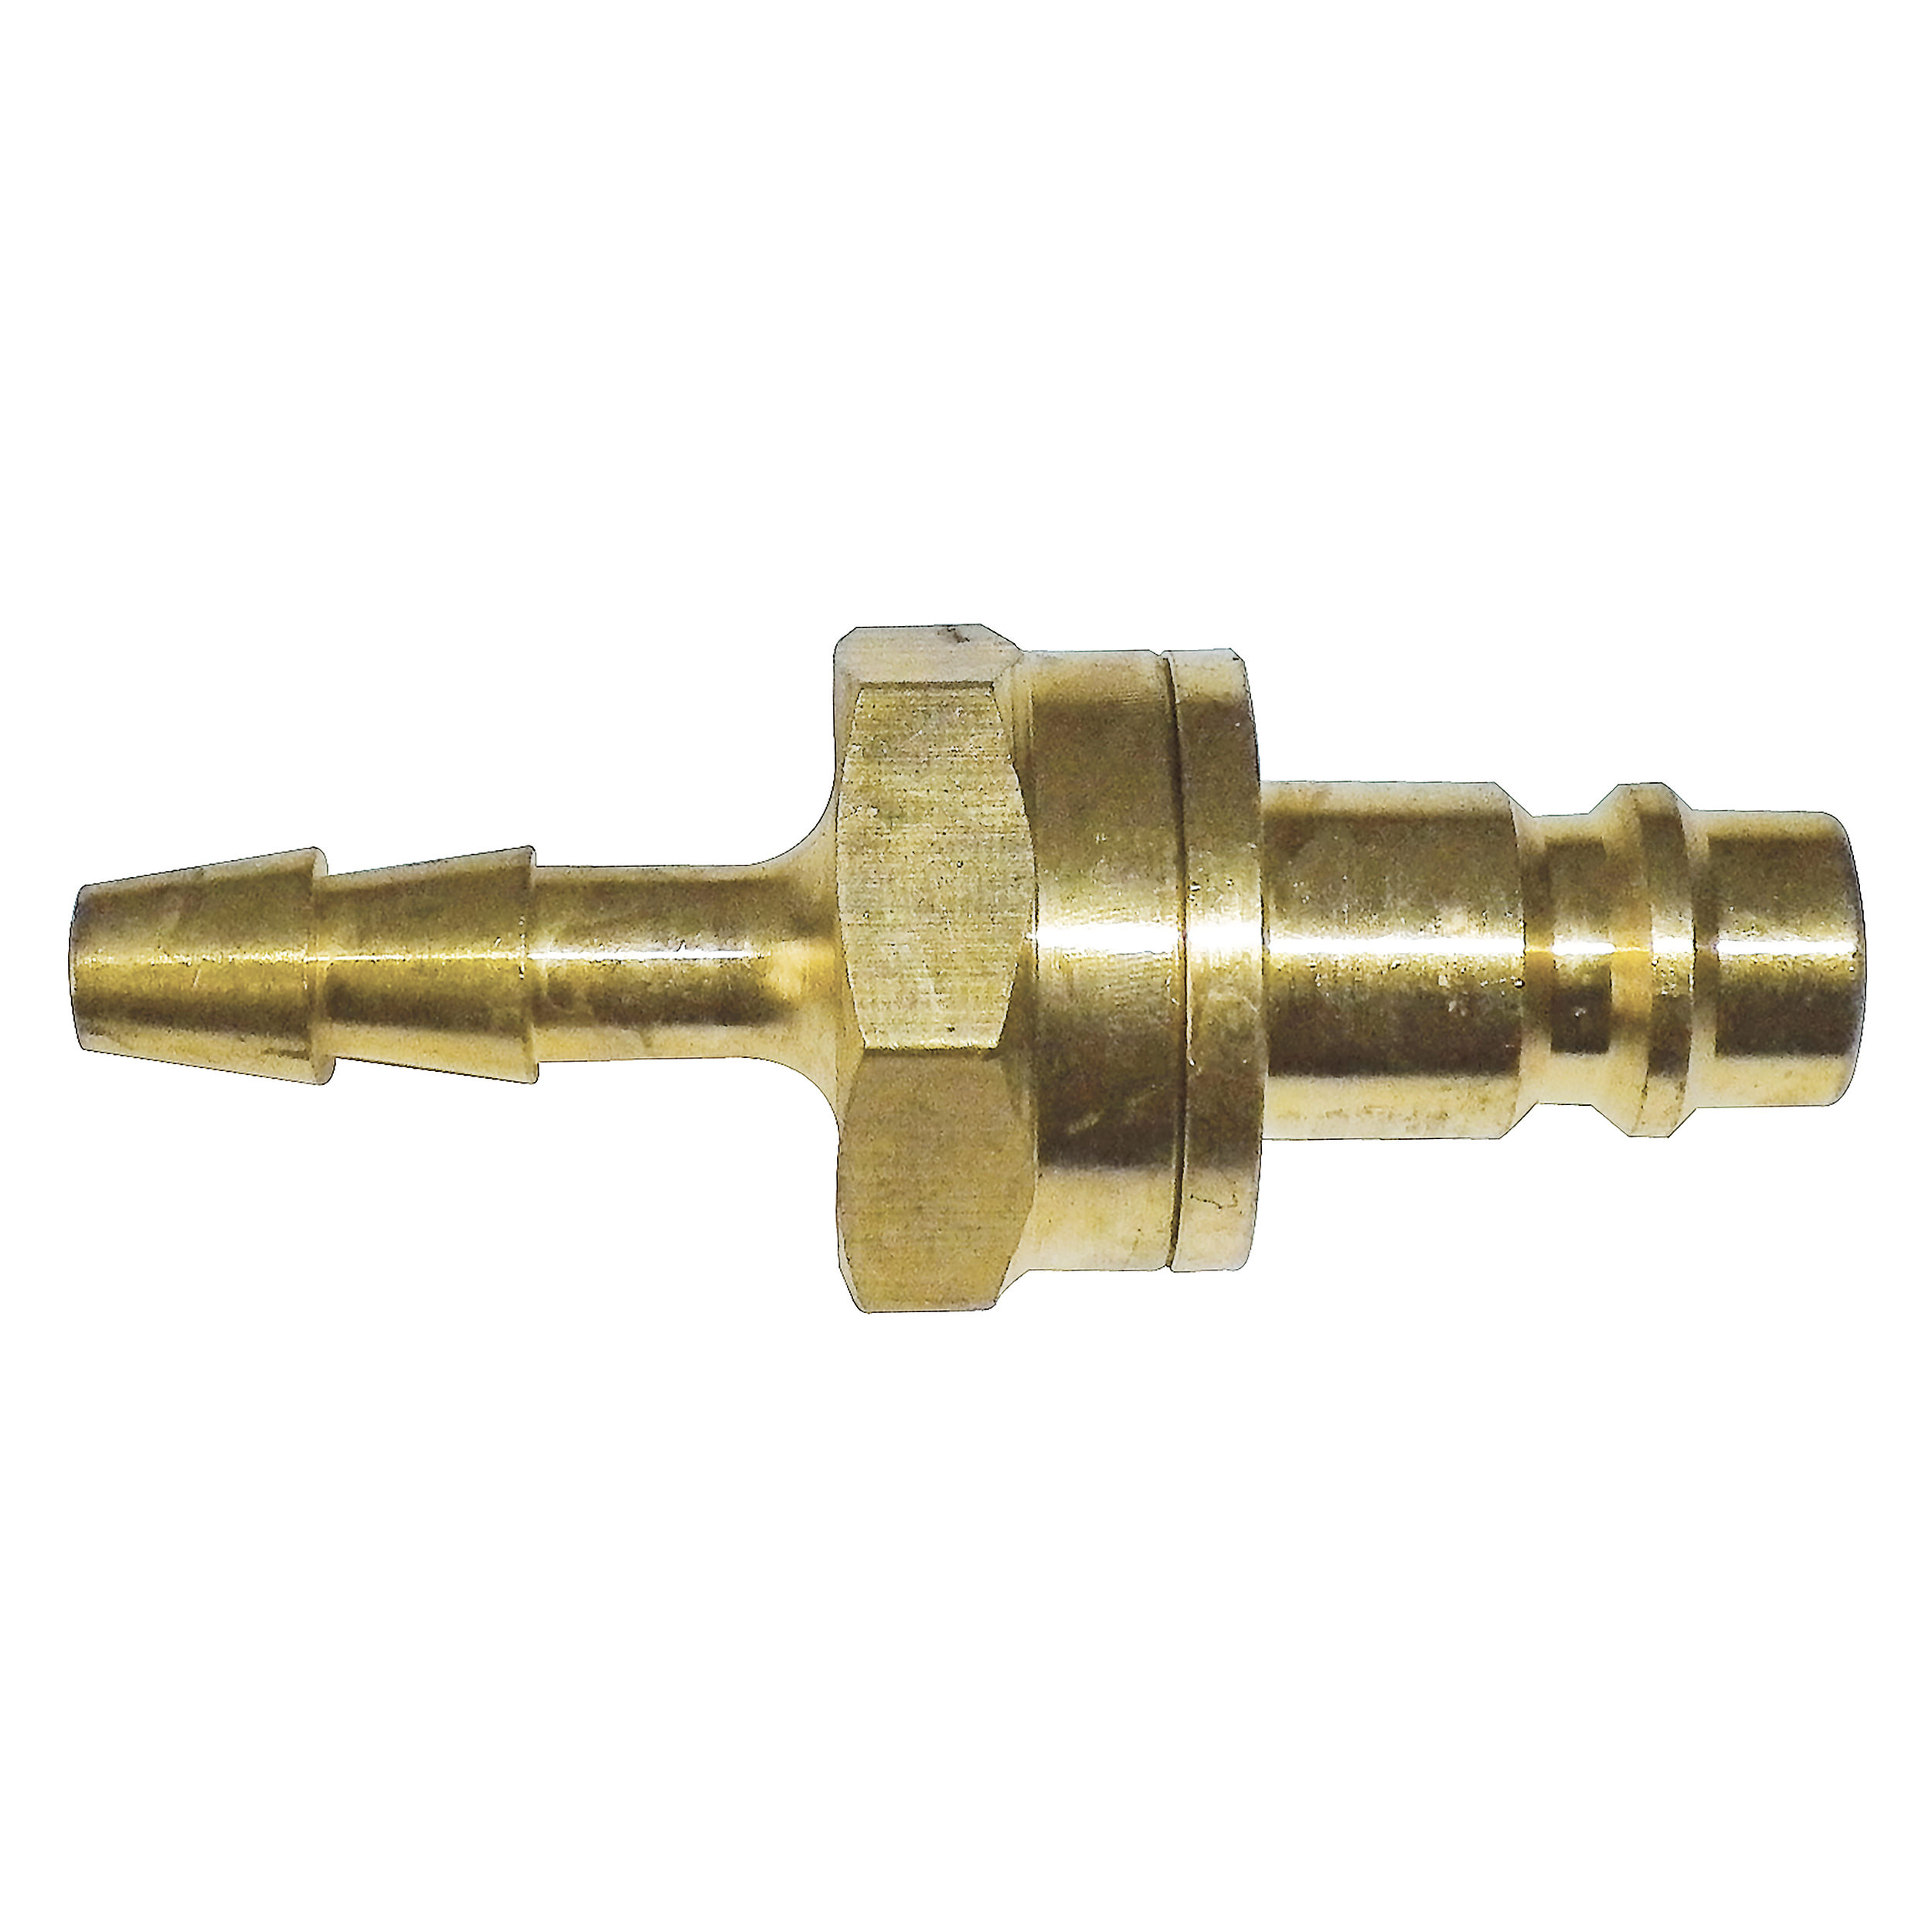 DN 7.2 plug w. Euro profile, both-way locking, QN 675 Nl/min, MOP: 232 psi, hose nozzle DN 9, length: 59 mm, AF 21